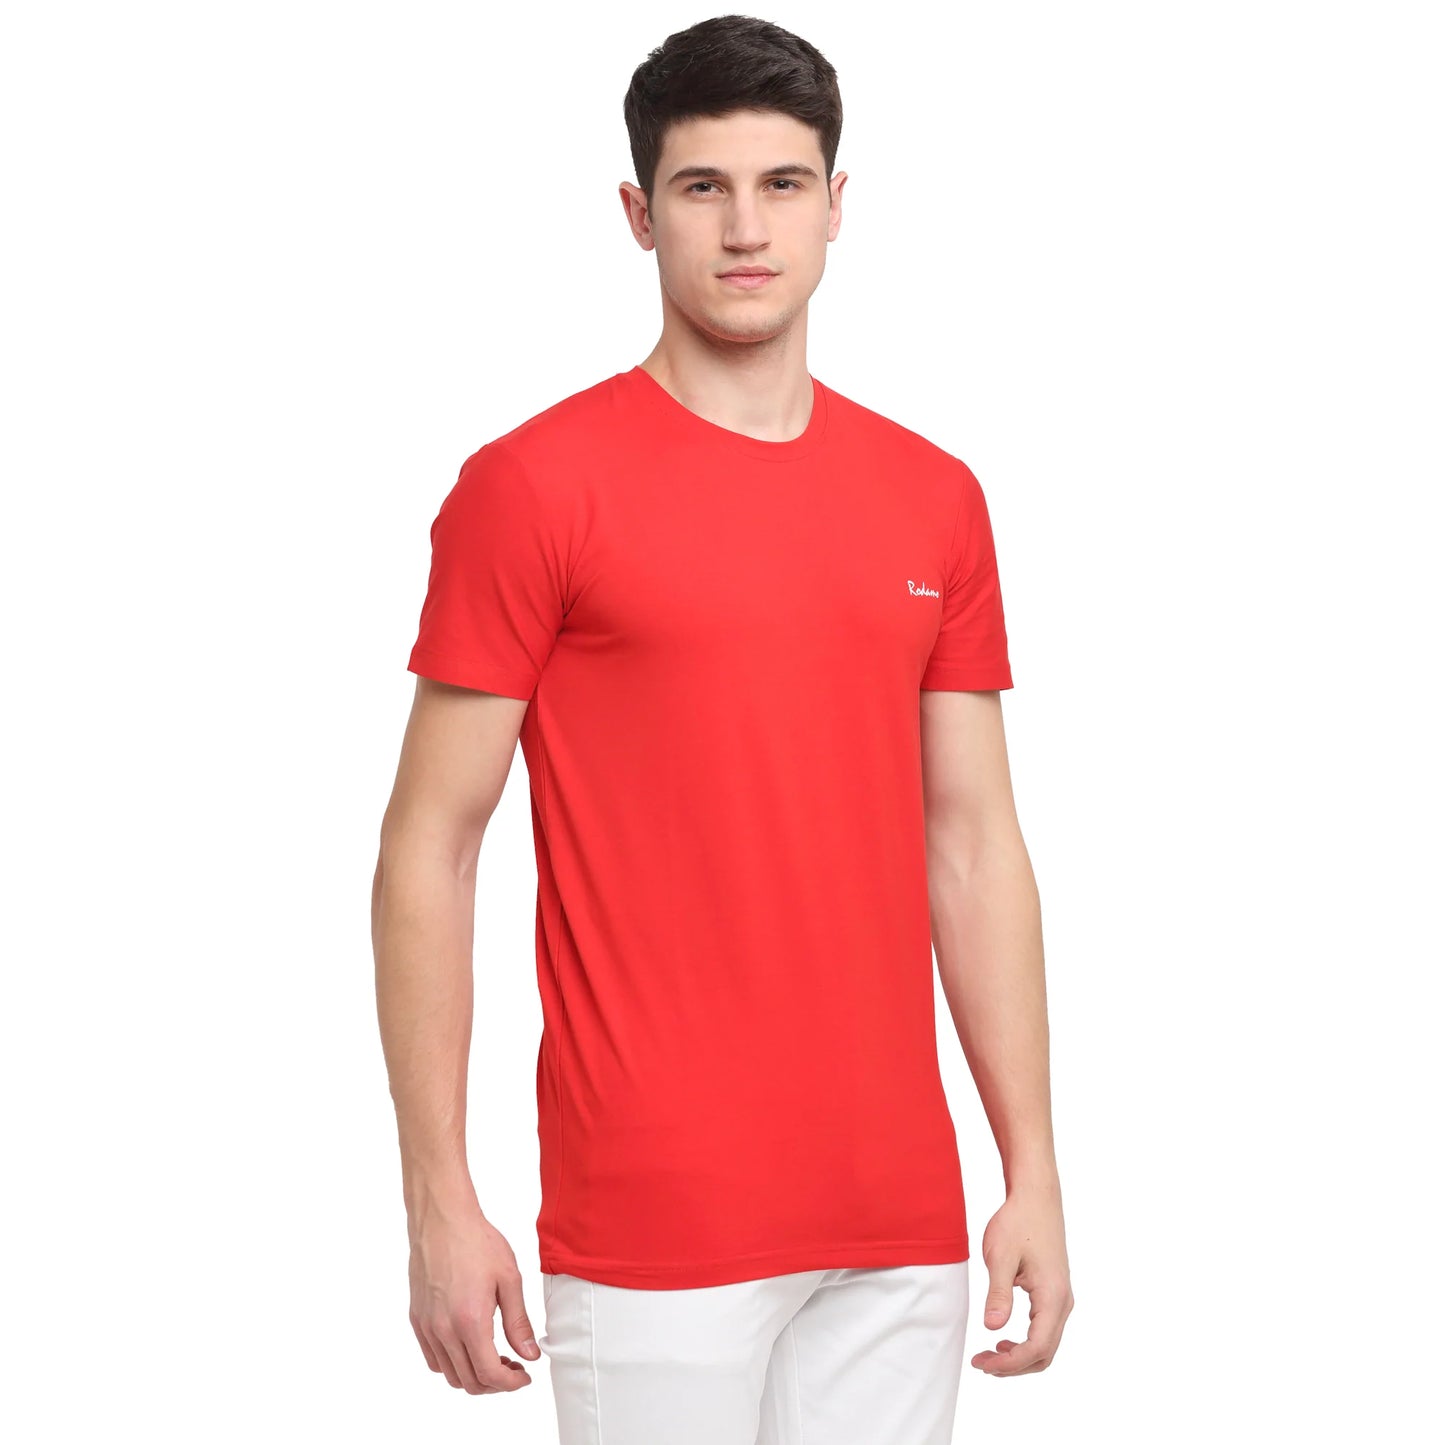 Men Red Solid Slim Fit T-shirt